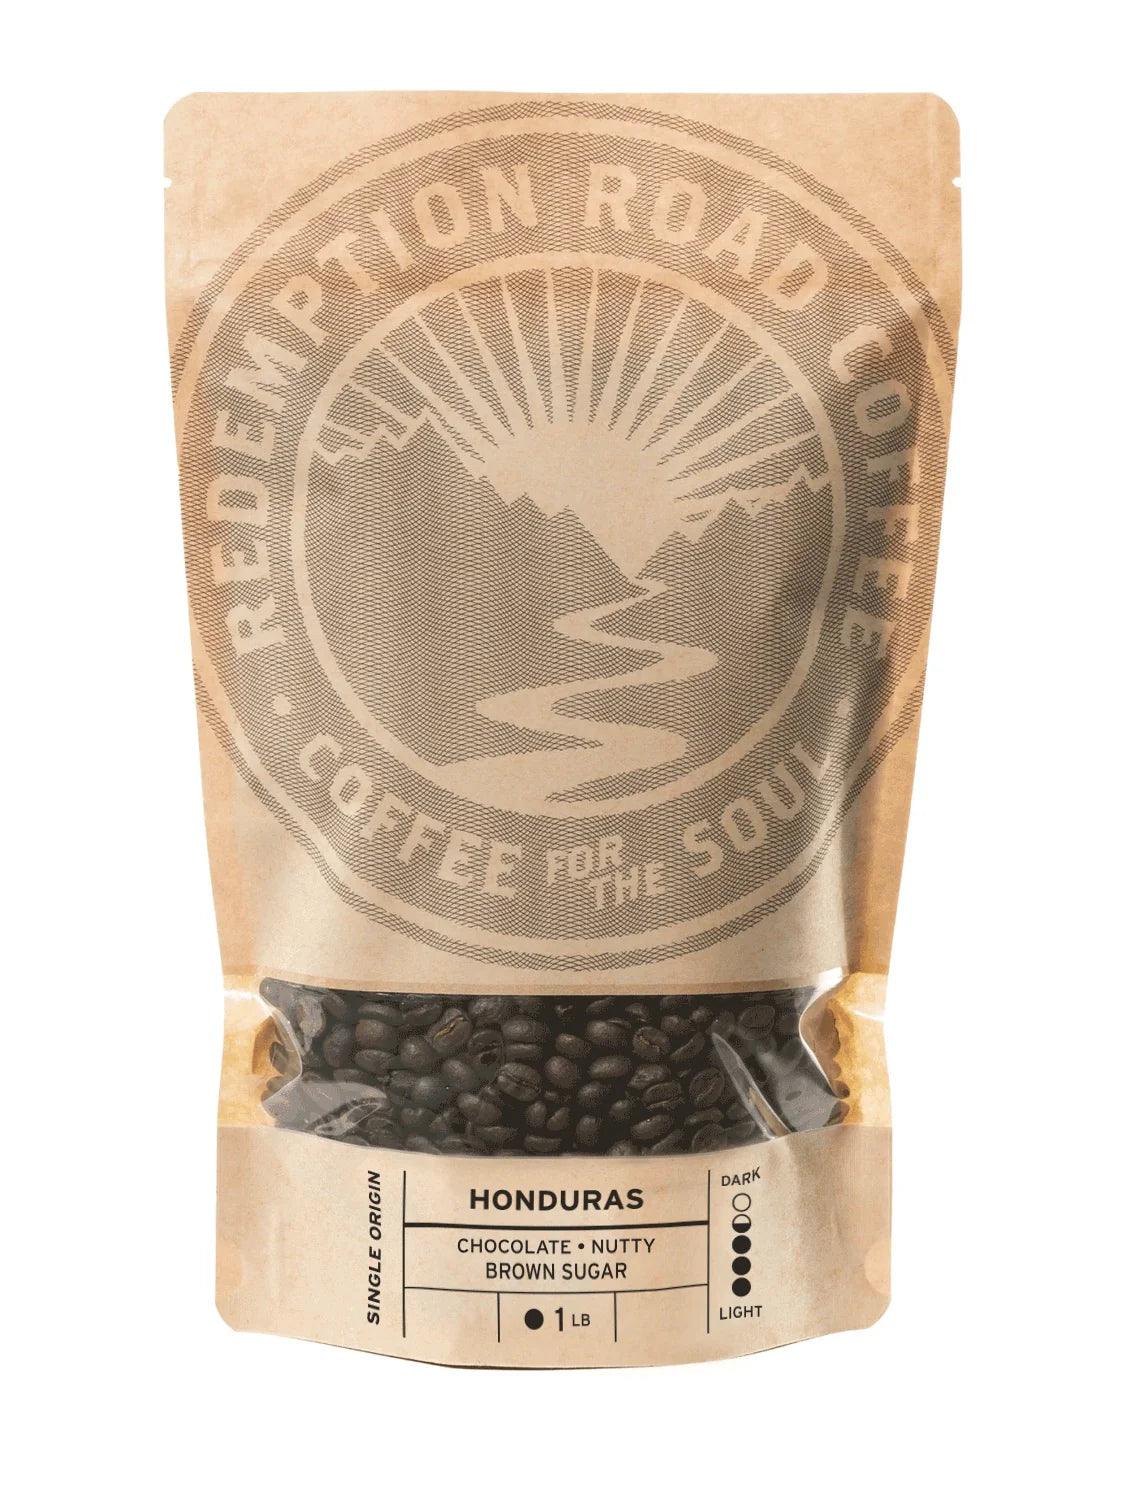 Colorado Coffee Redemption Road - 1/4lb pouch - 39 North CO 